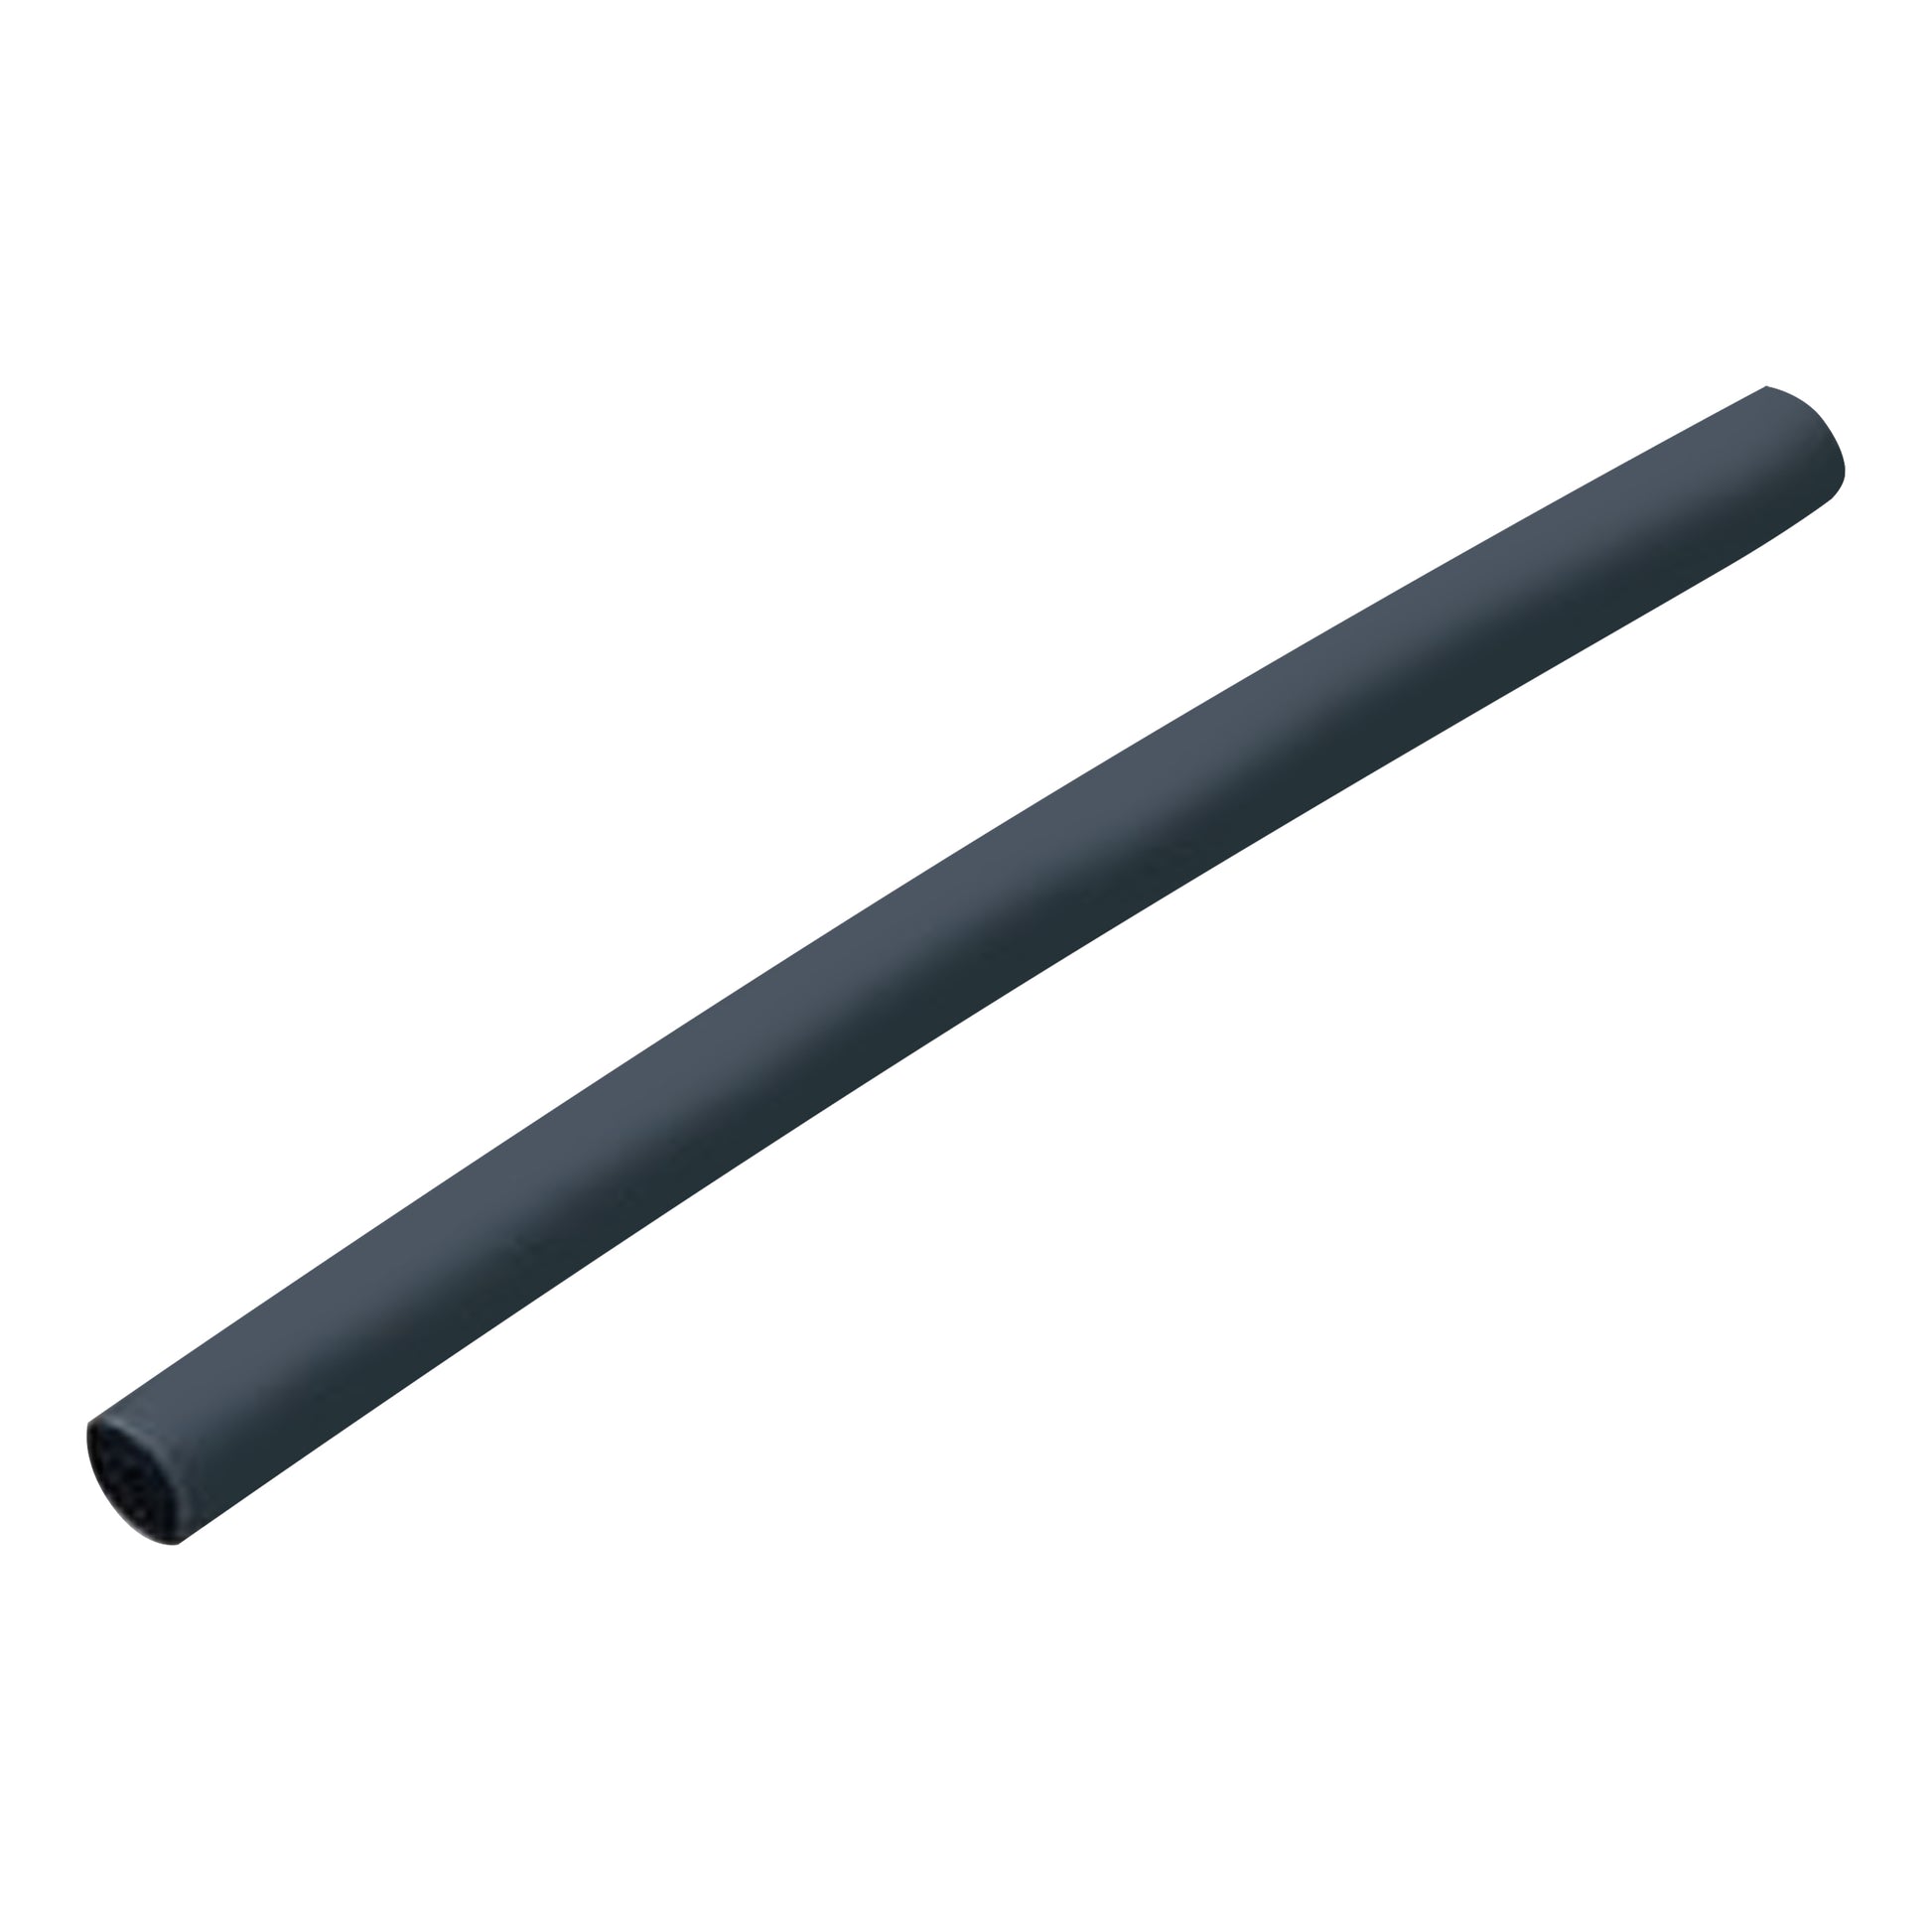 Flexible Thin Single Wall Non-Adhesive Heat Shrink Tubing 2:1 Black 2" ID - 48" Inch 4 Pack